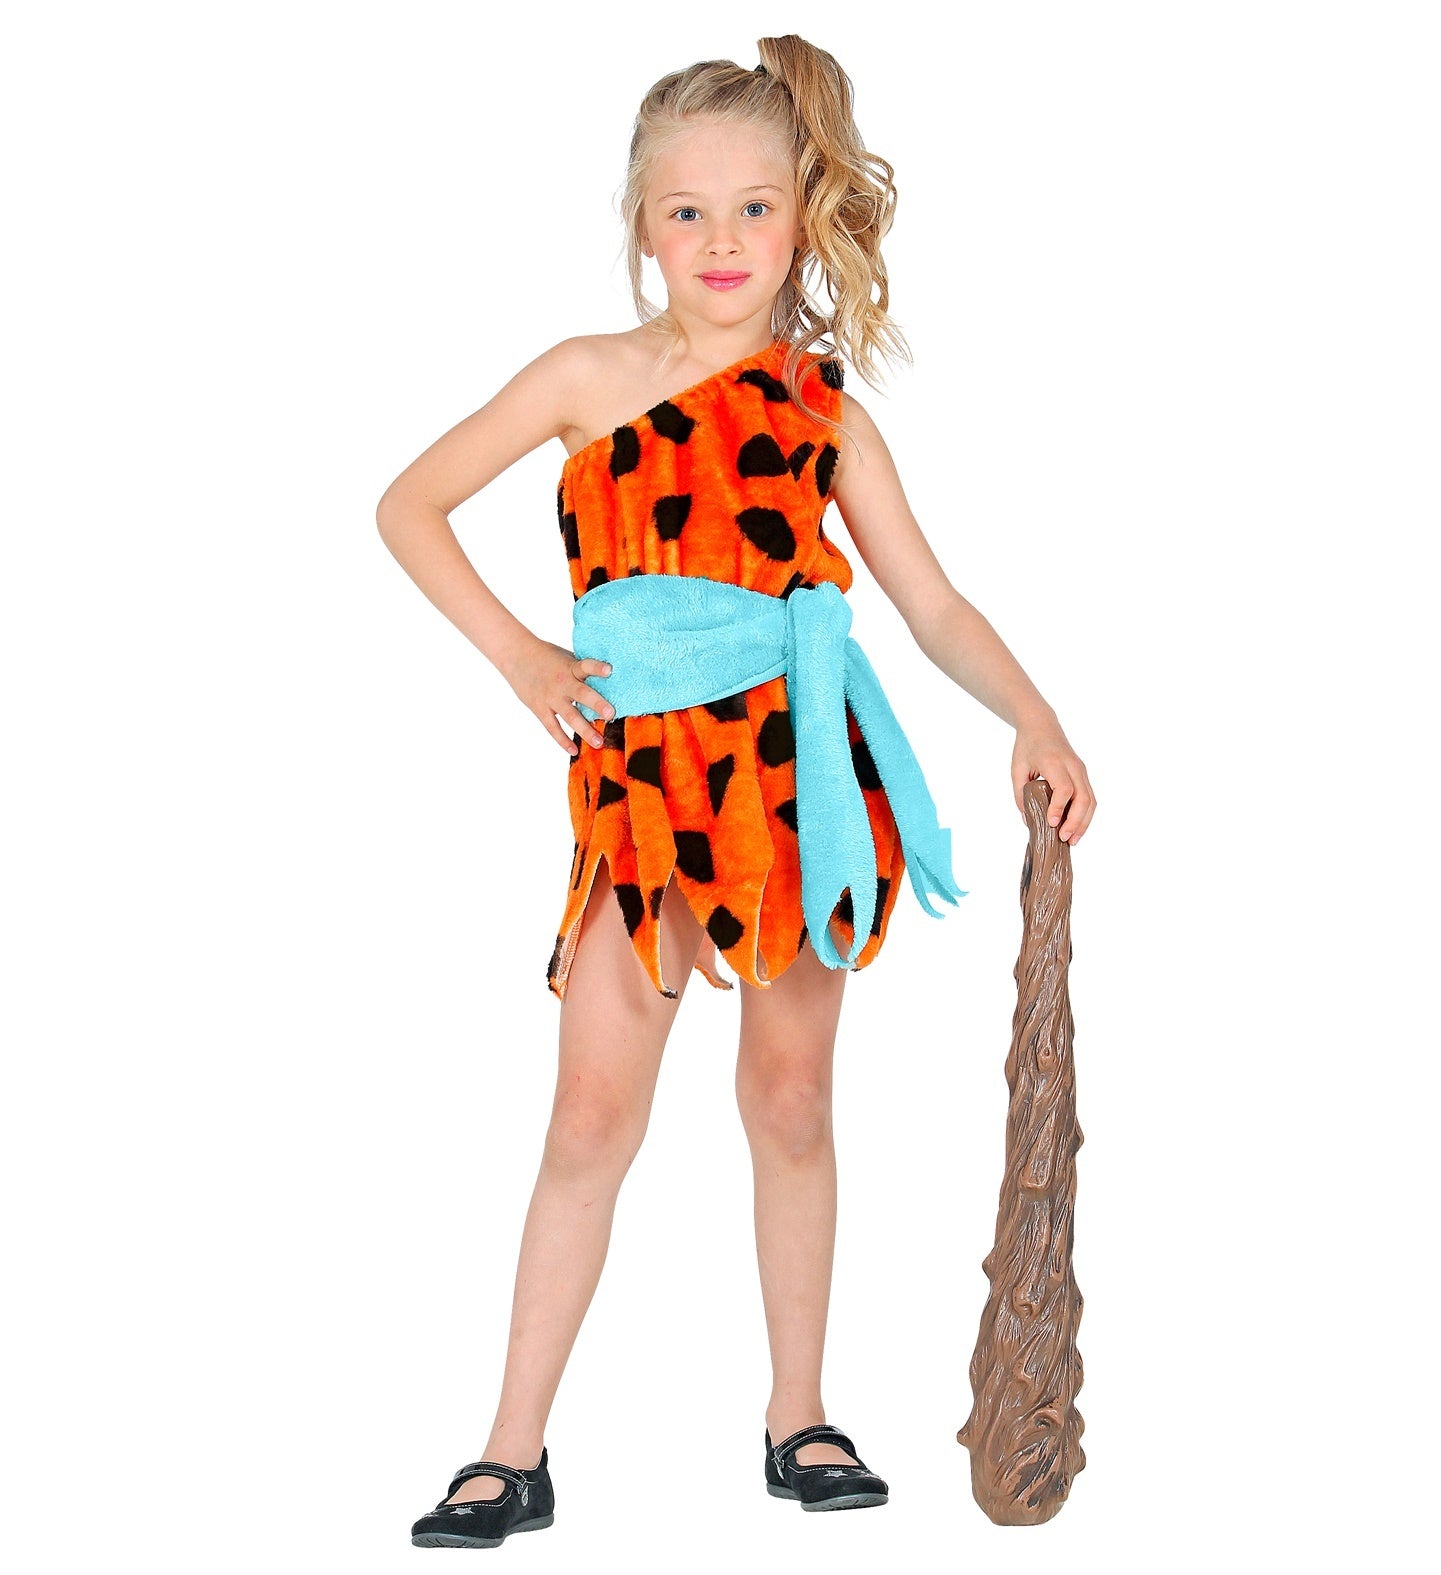 Widmann - The Flintstones Kostuum - Pebbles Flinsteen - Meisje - blauw,oranje - Maat 116 - Carnavalskleding - Verkleedkleding